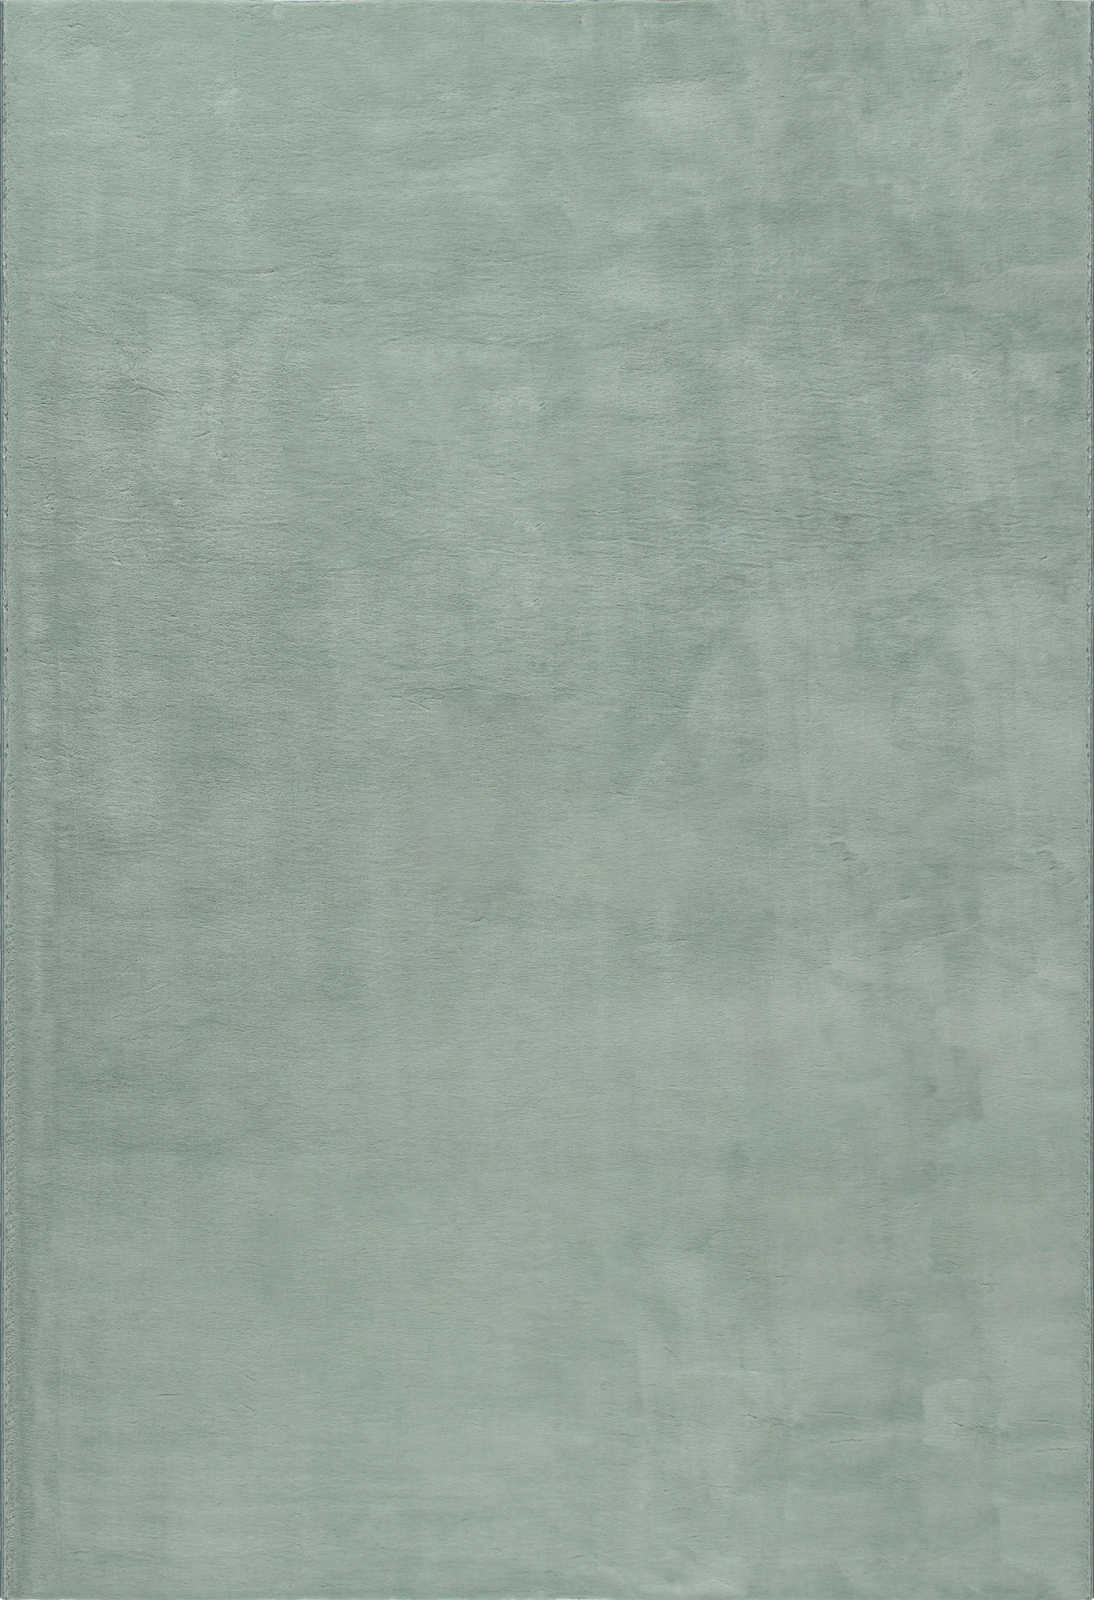             Soft high pile carpet in soft green - 170 x 120 cm
        